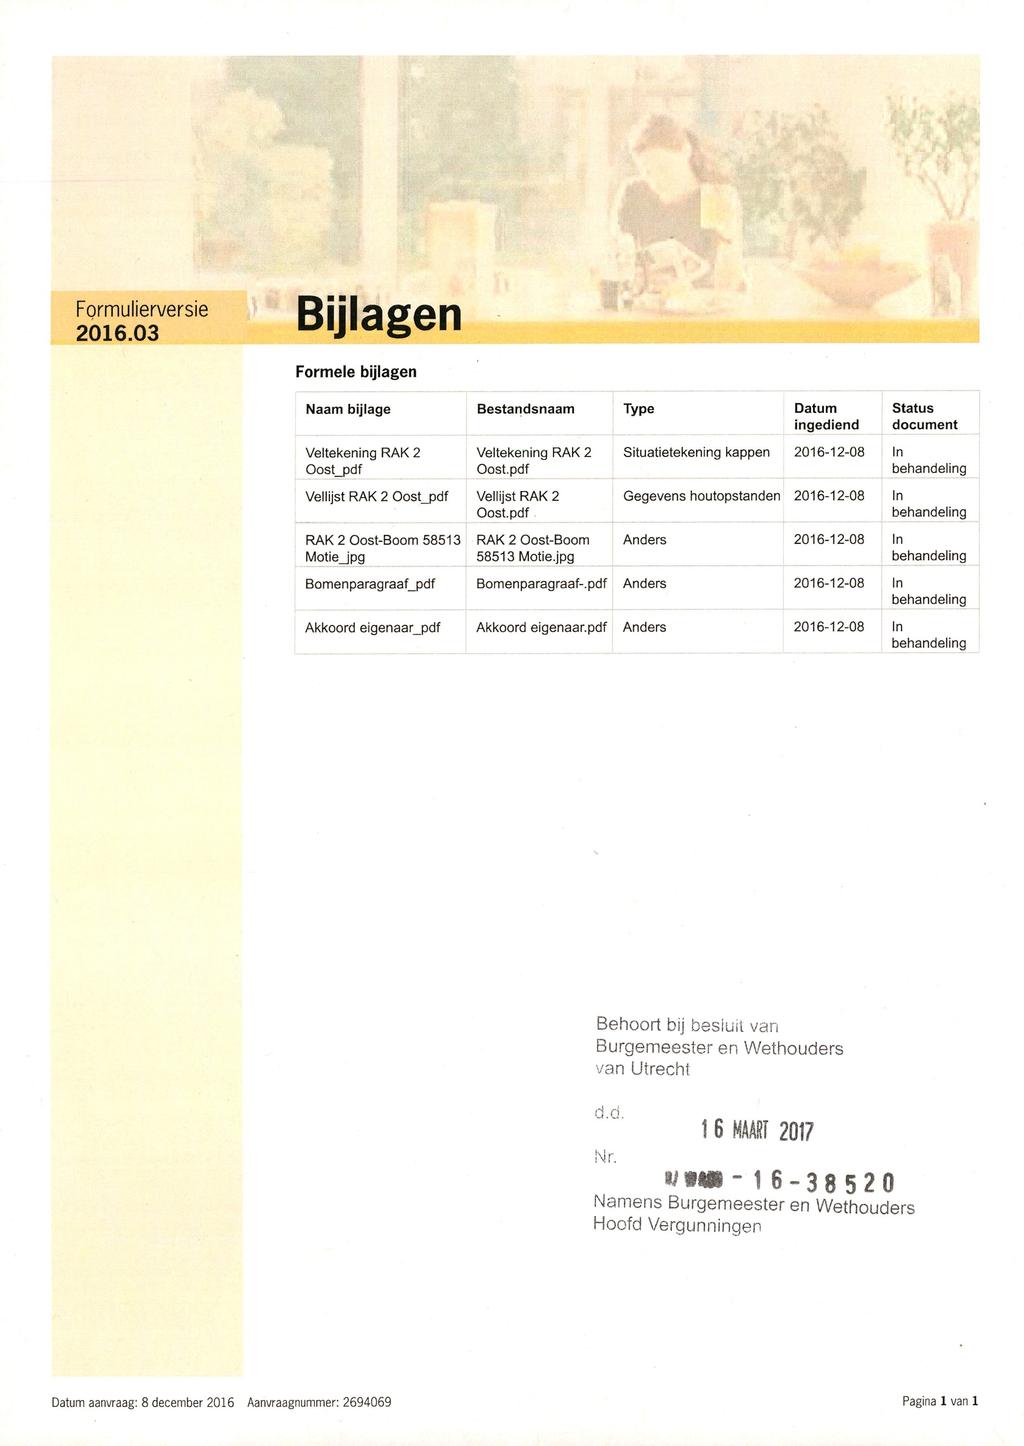 Formulierversie 2016.03 Bijlagen Formele bijlagen Naam bijlage Bestandsnaam Type Datum ingediend Status document Veltekening RAK 2 Oostpdf Veltekening RAK 2 Oost.